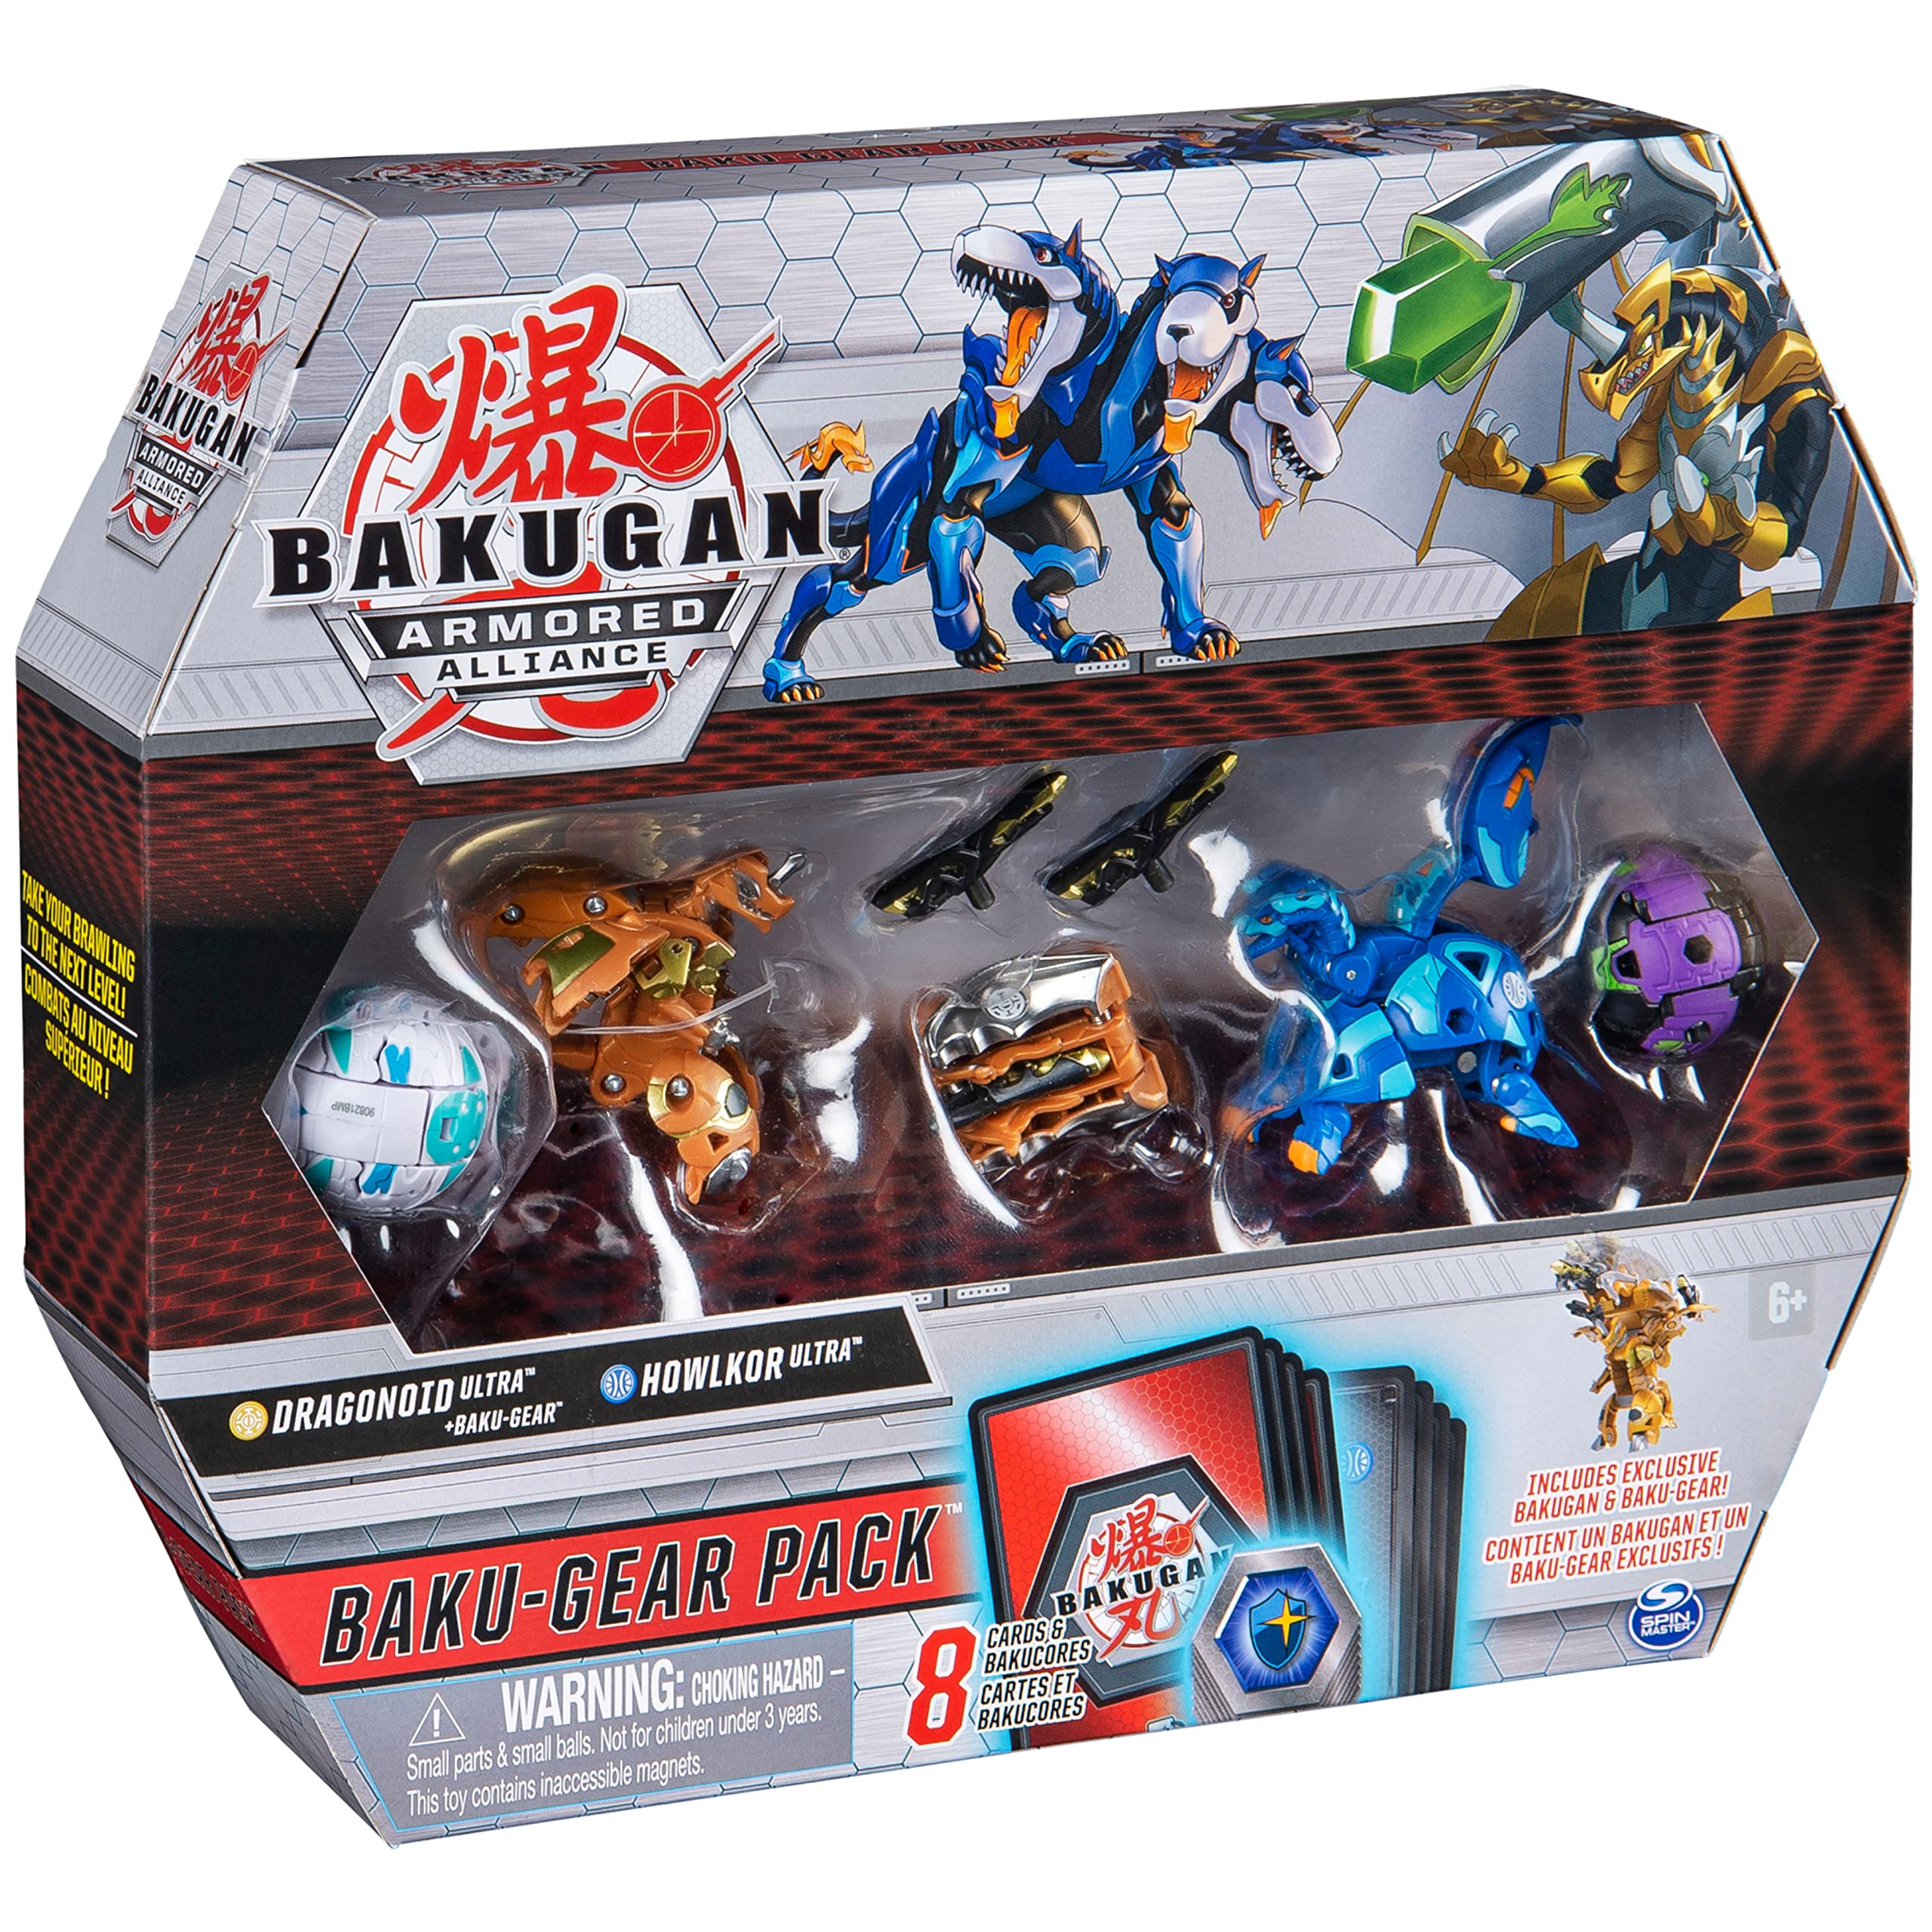 Bakugan Baku-Gear 4-Pack, Dragonoid Ultra with Baku-Gear and Howlkor Ultra, Collectible Action Figures, Kids Toys for Boys